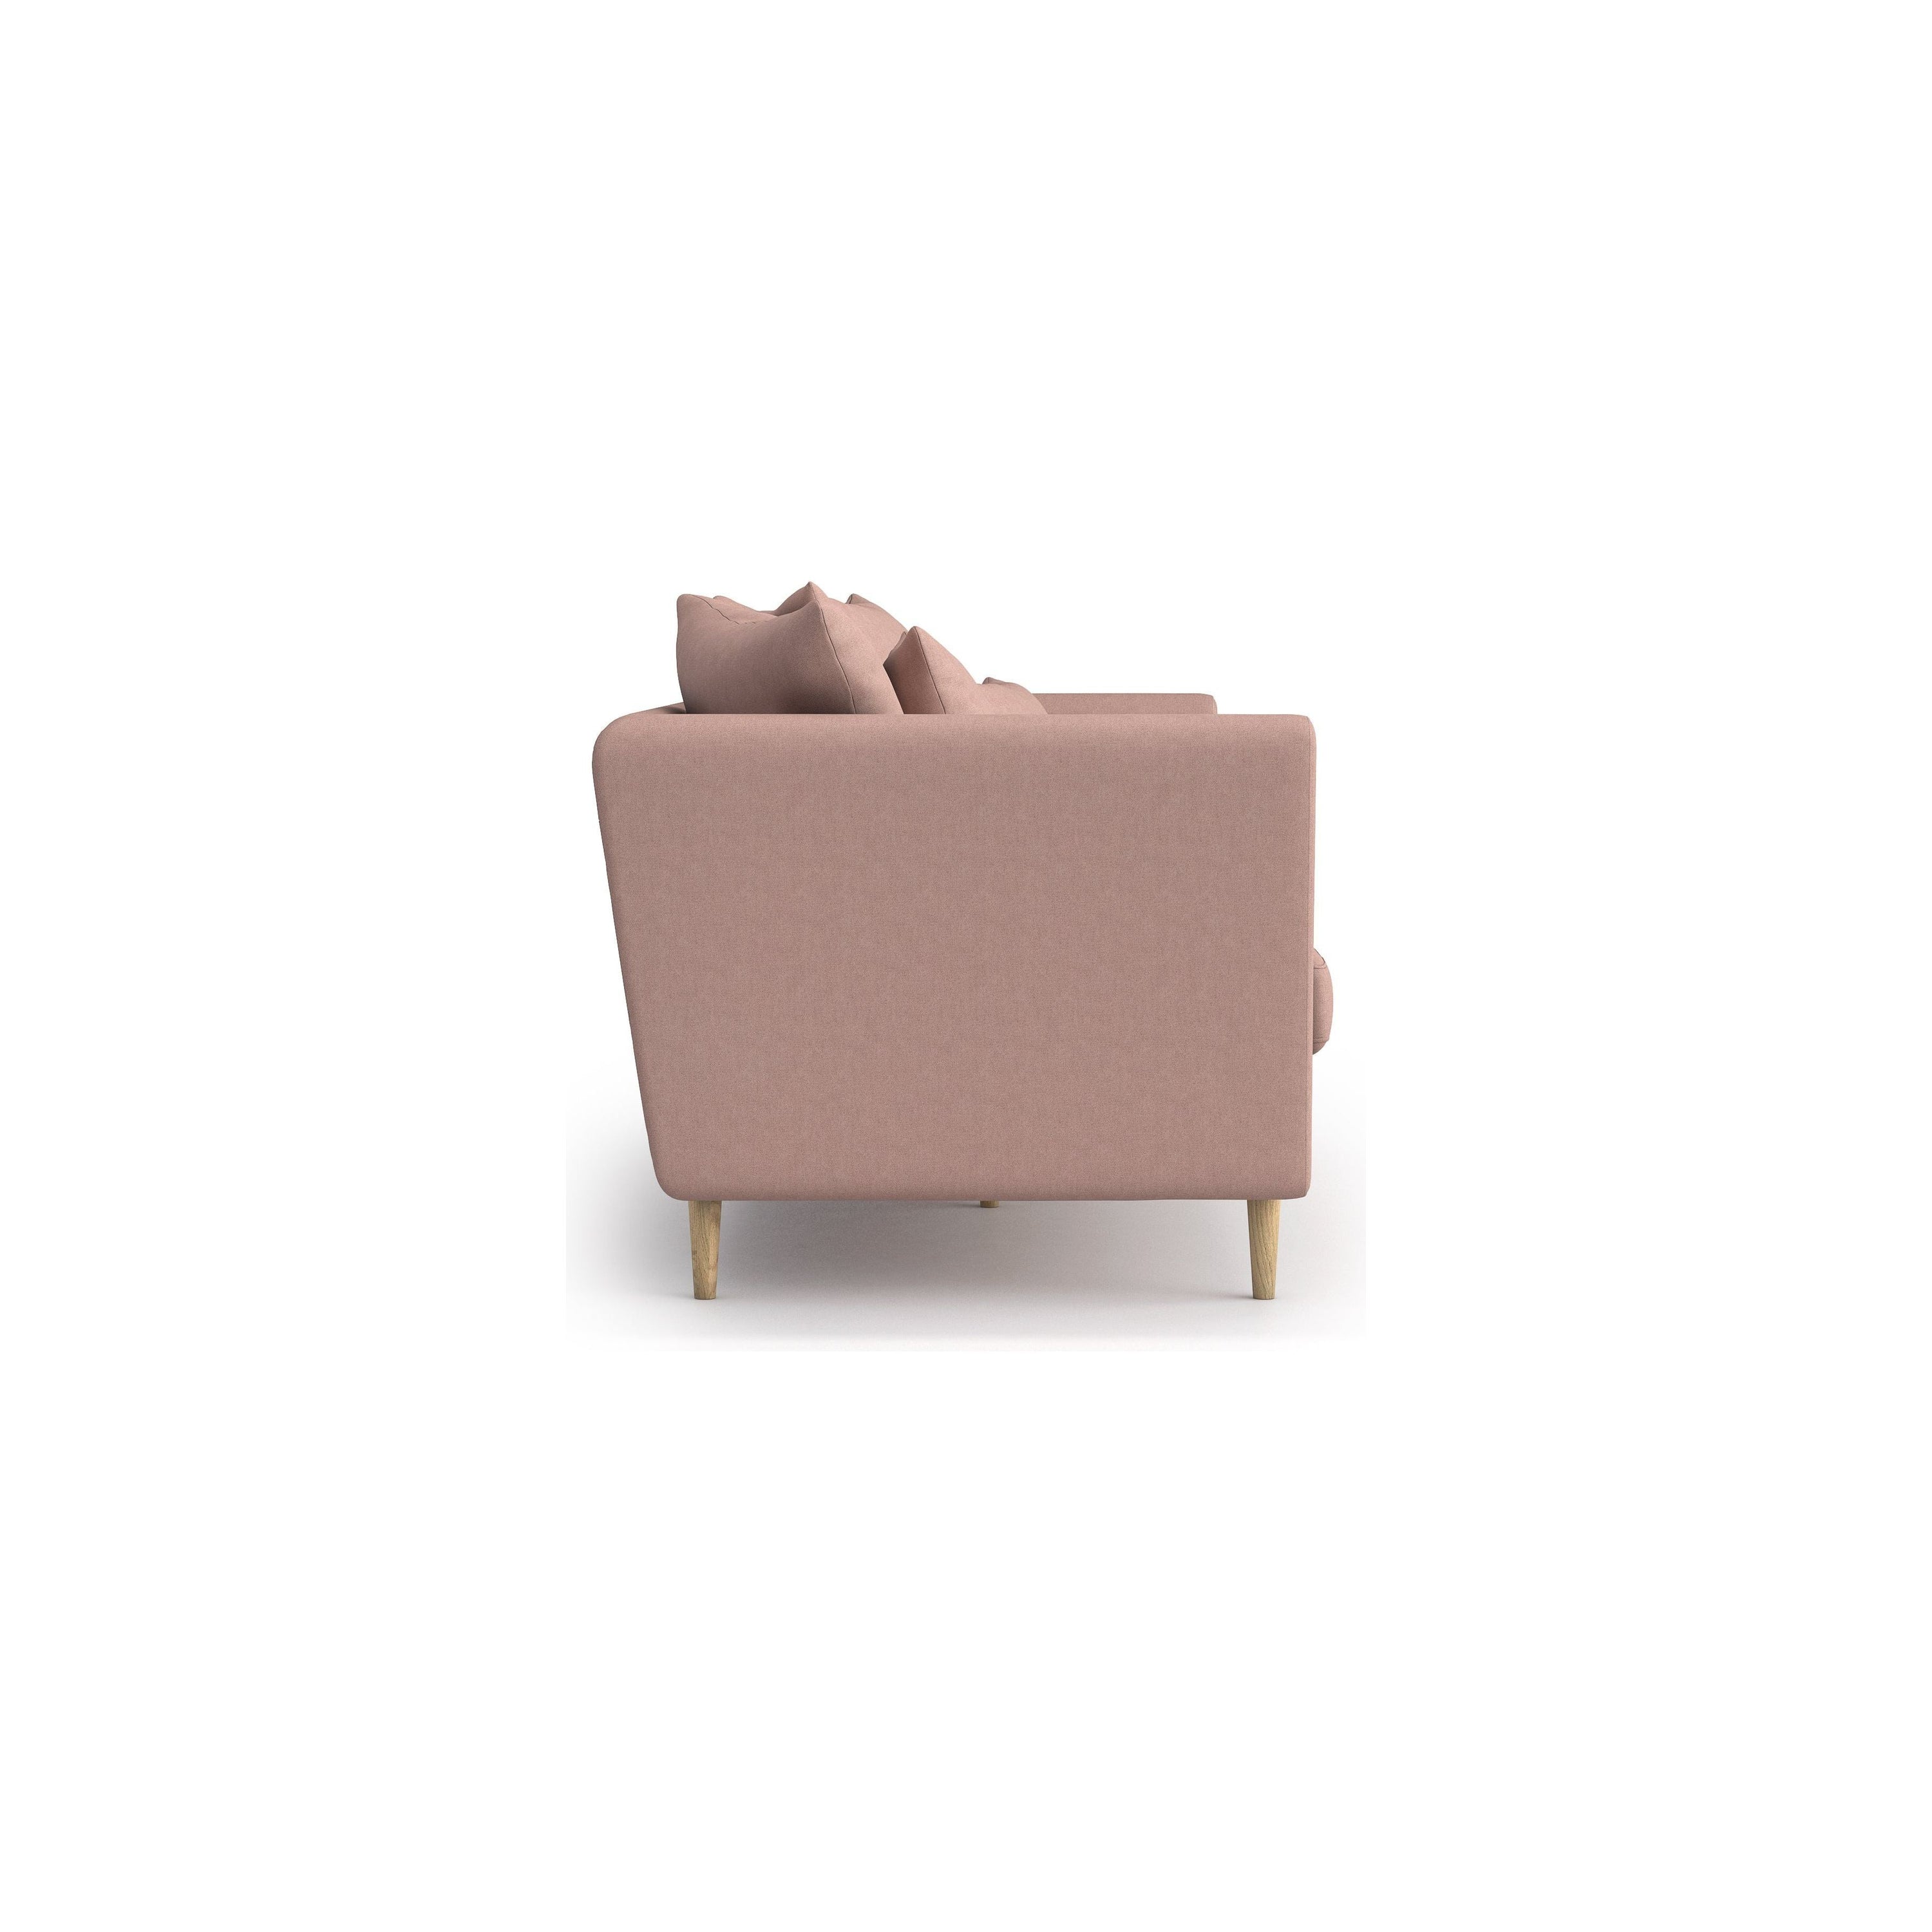 JOLEEN 3 vietų sofa lova, rožinė spalva